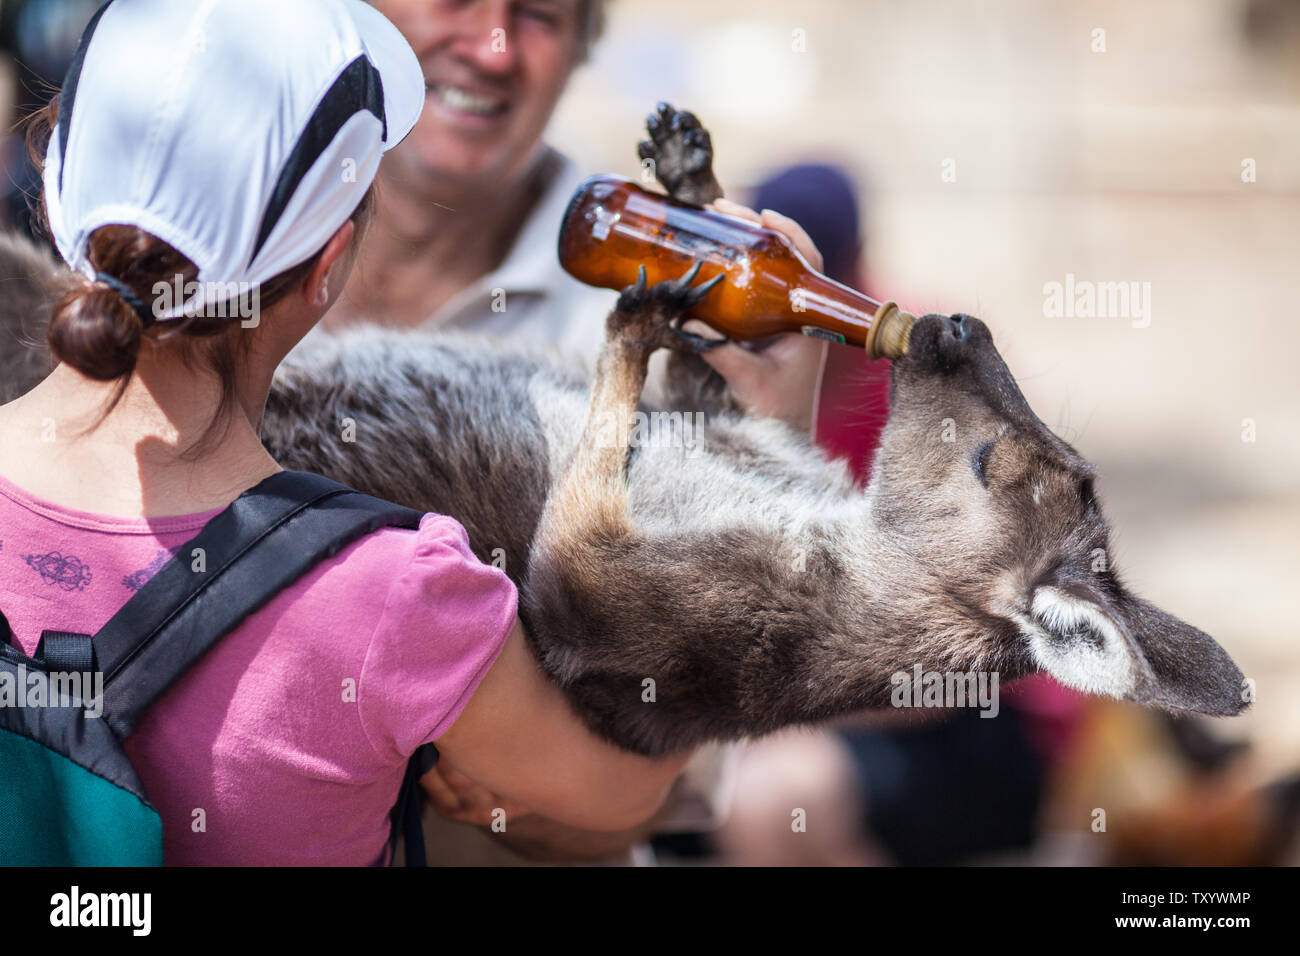 Woman holding on her hands kangaroo and feeding it Stock Photo